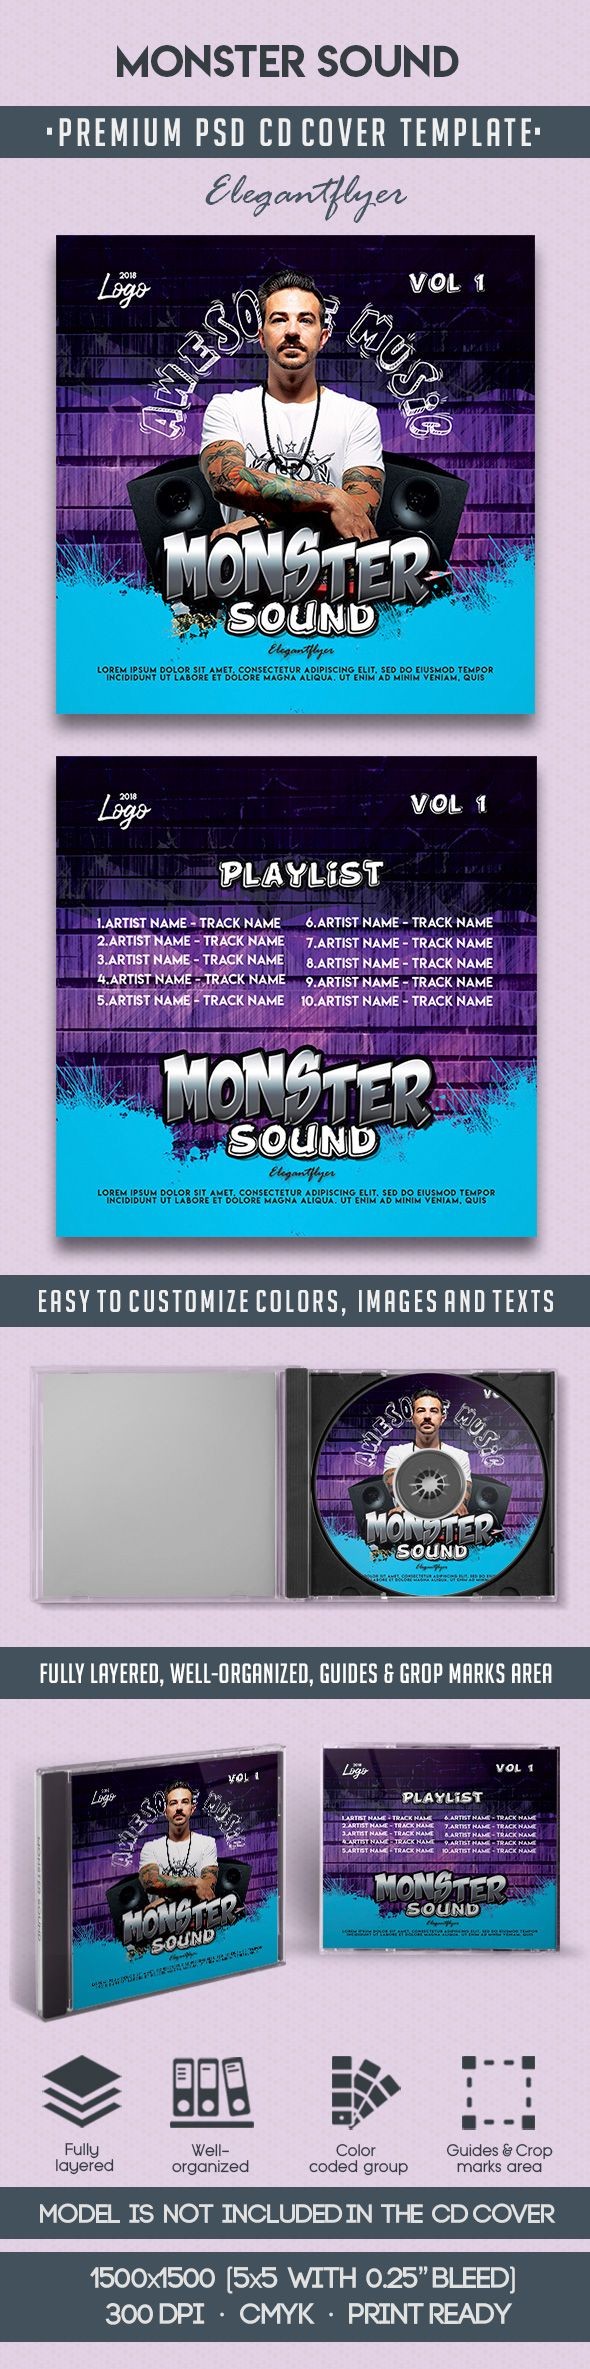 Monster Sound by ElegantFlyer